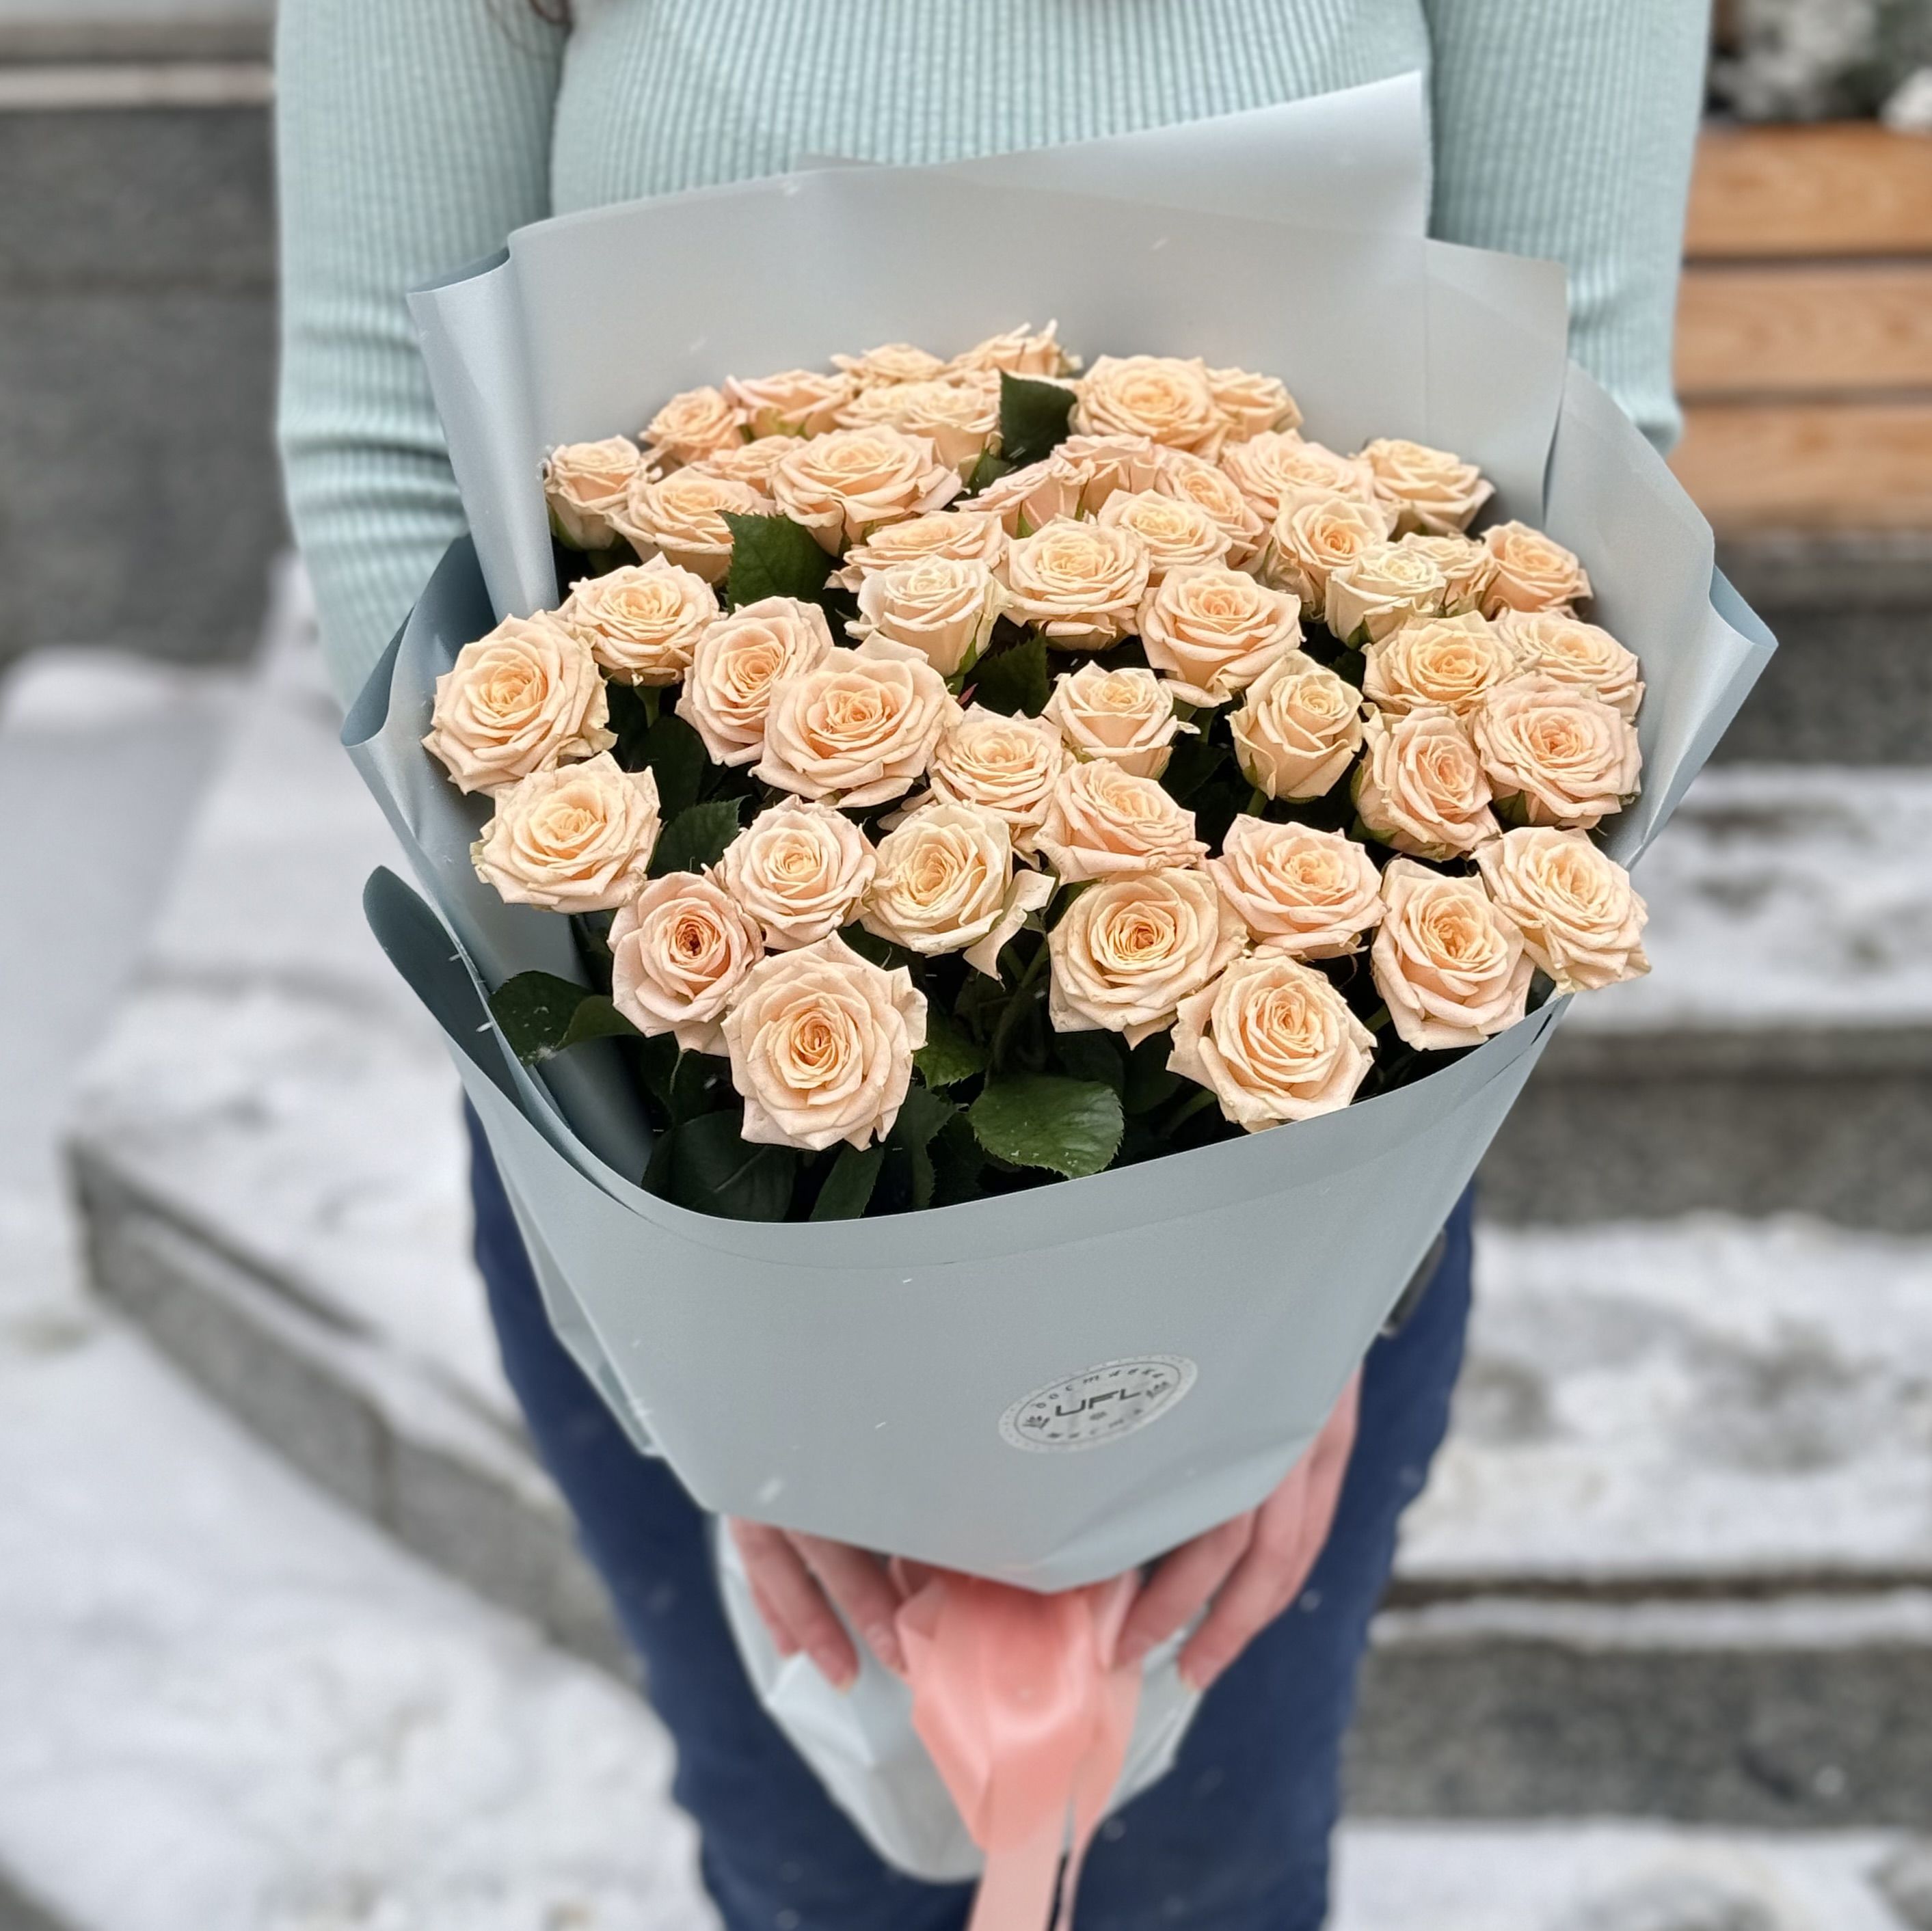 Send Heart-Shaped Flowers to Ukraine - Flowers to Ukraine – Ukraine Gift  Delivery